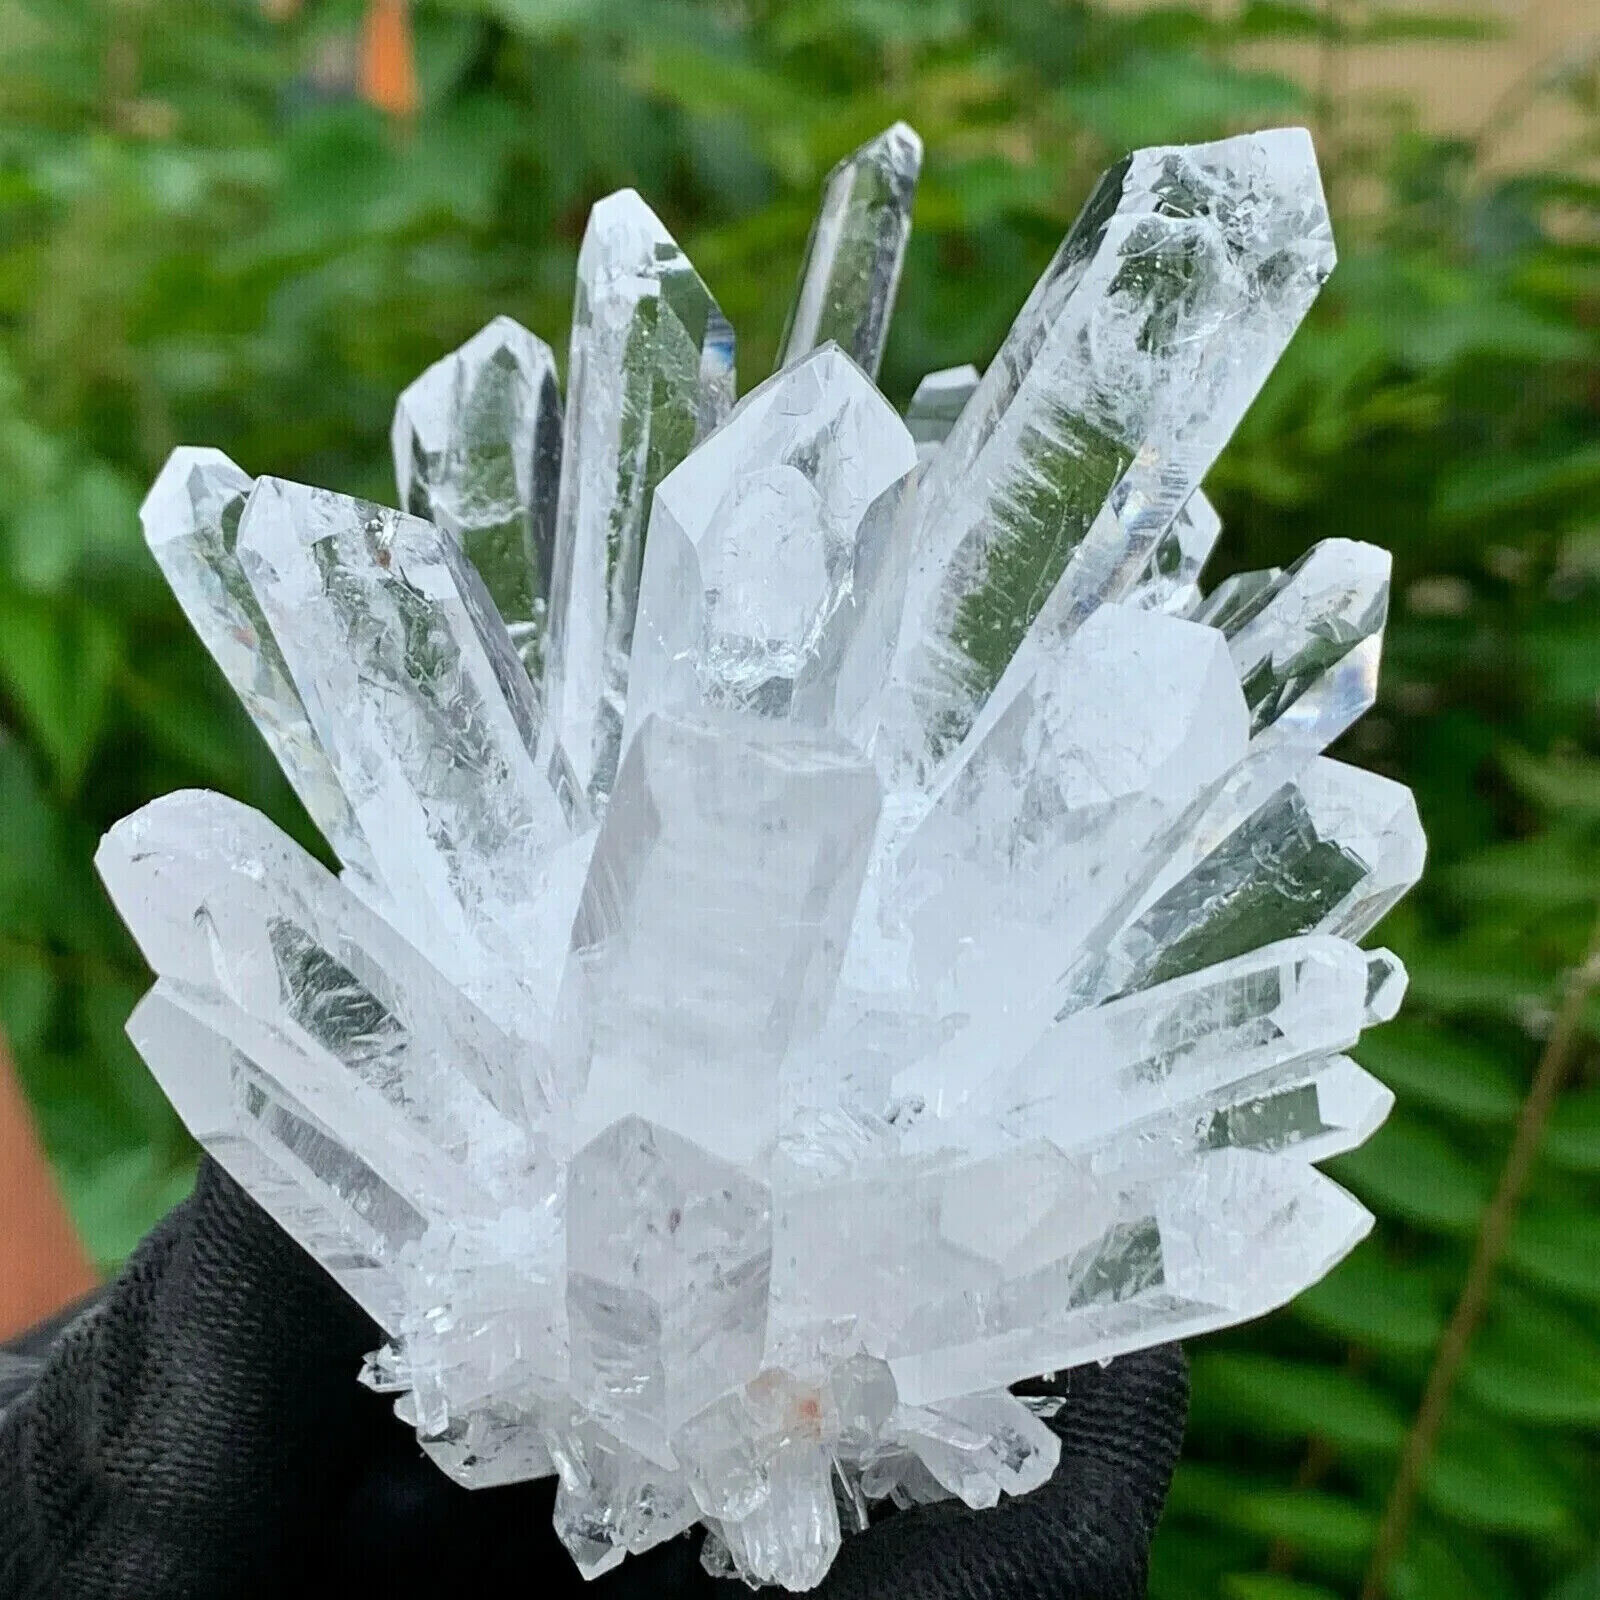 New Find white Phantom Quartz Crystal Cluster Mineral Specimen Healing 300g+ 1pc